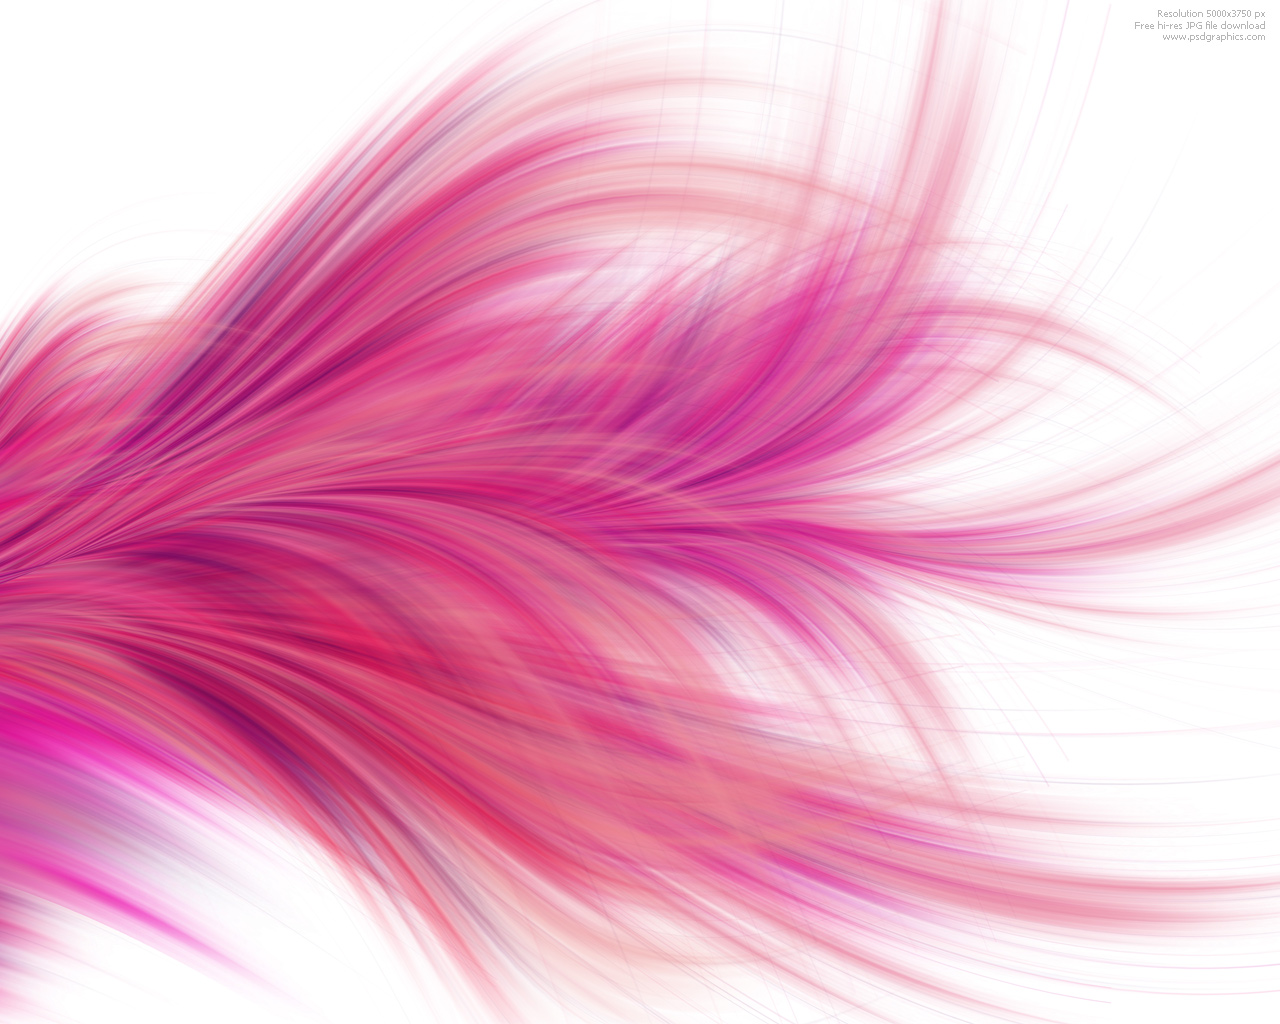 hair texture, background, pink hair texture, background